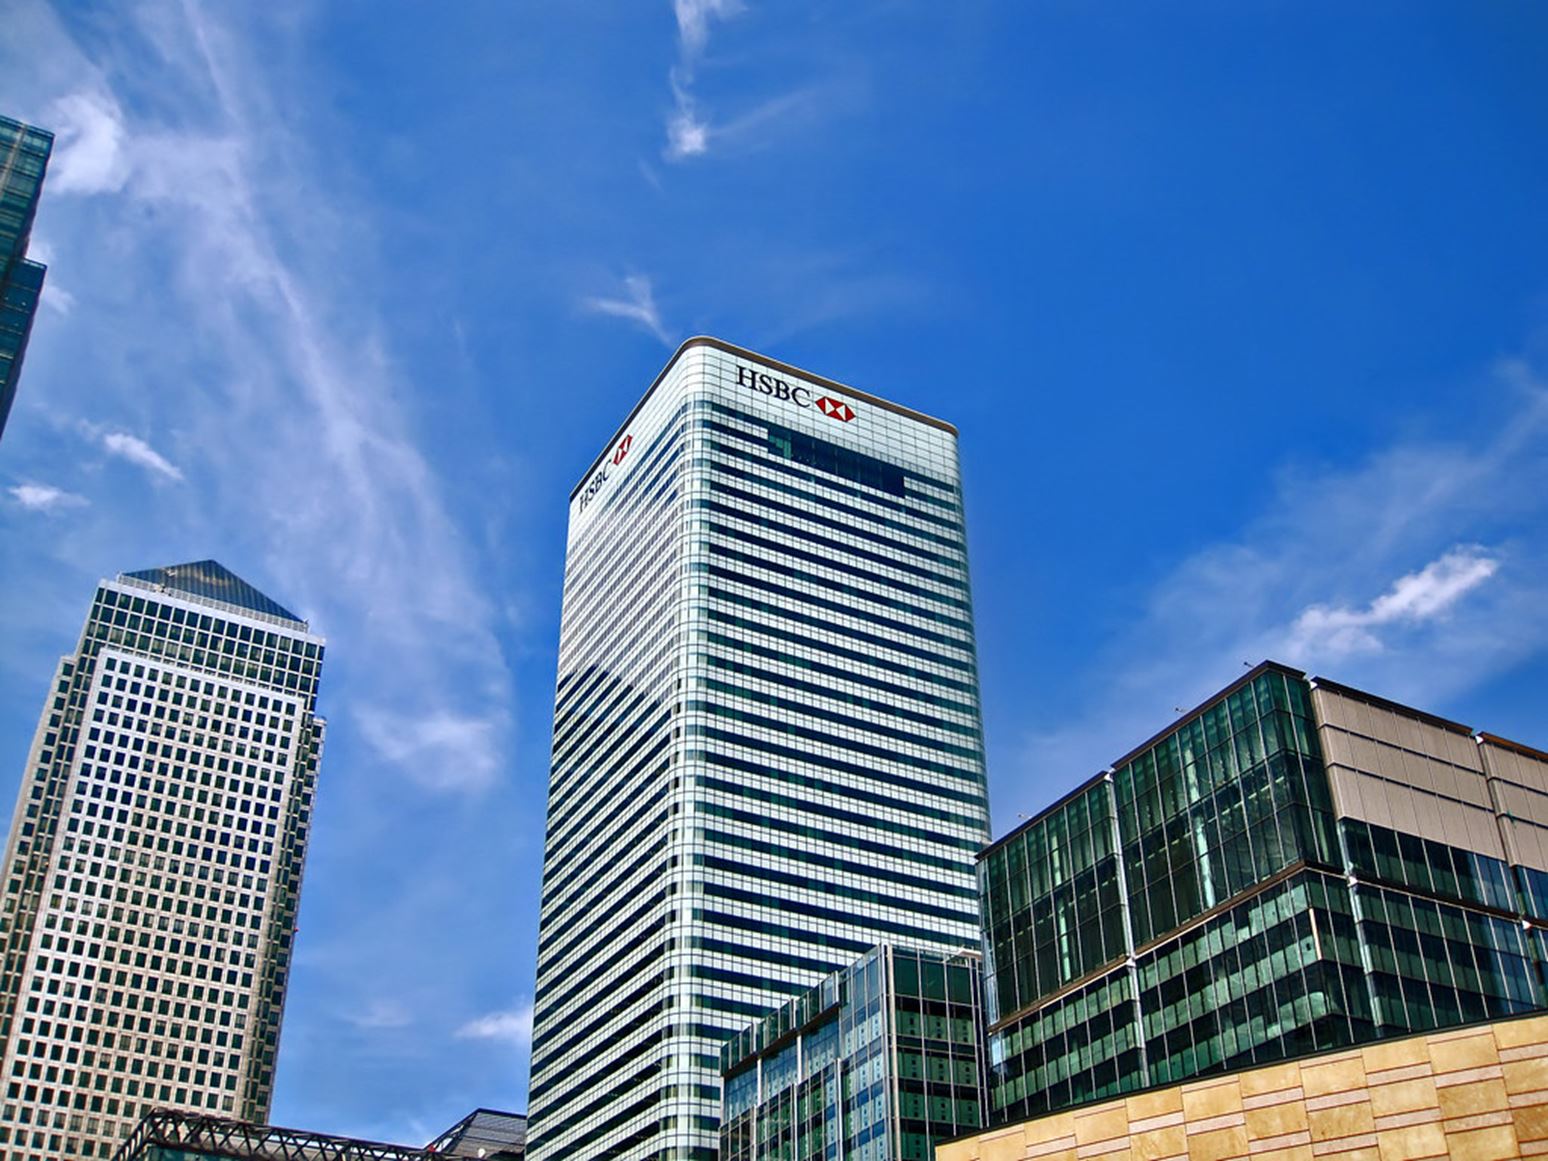 HSBC Building at 8 Canada Square